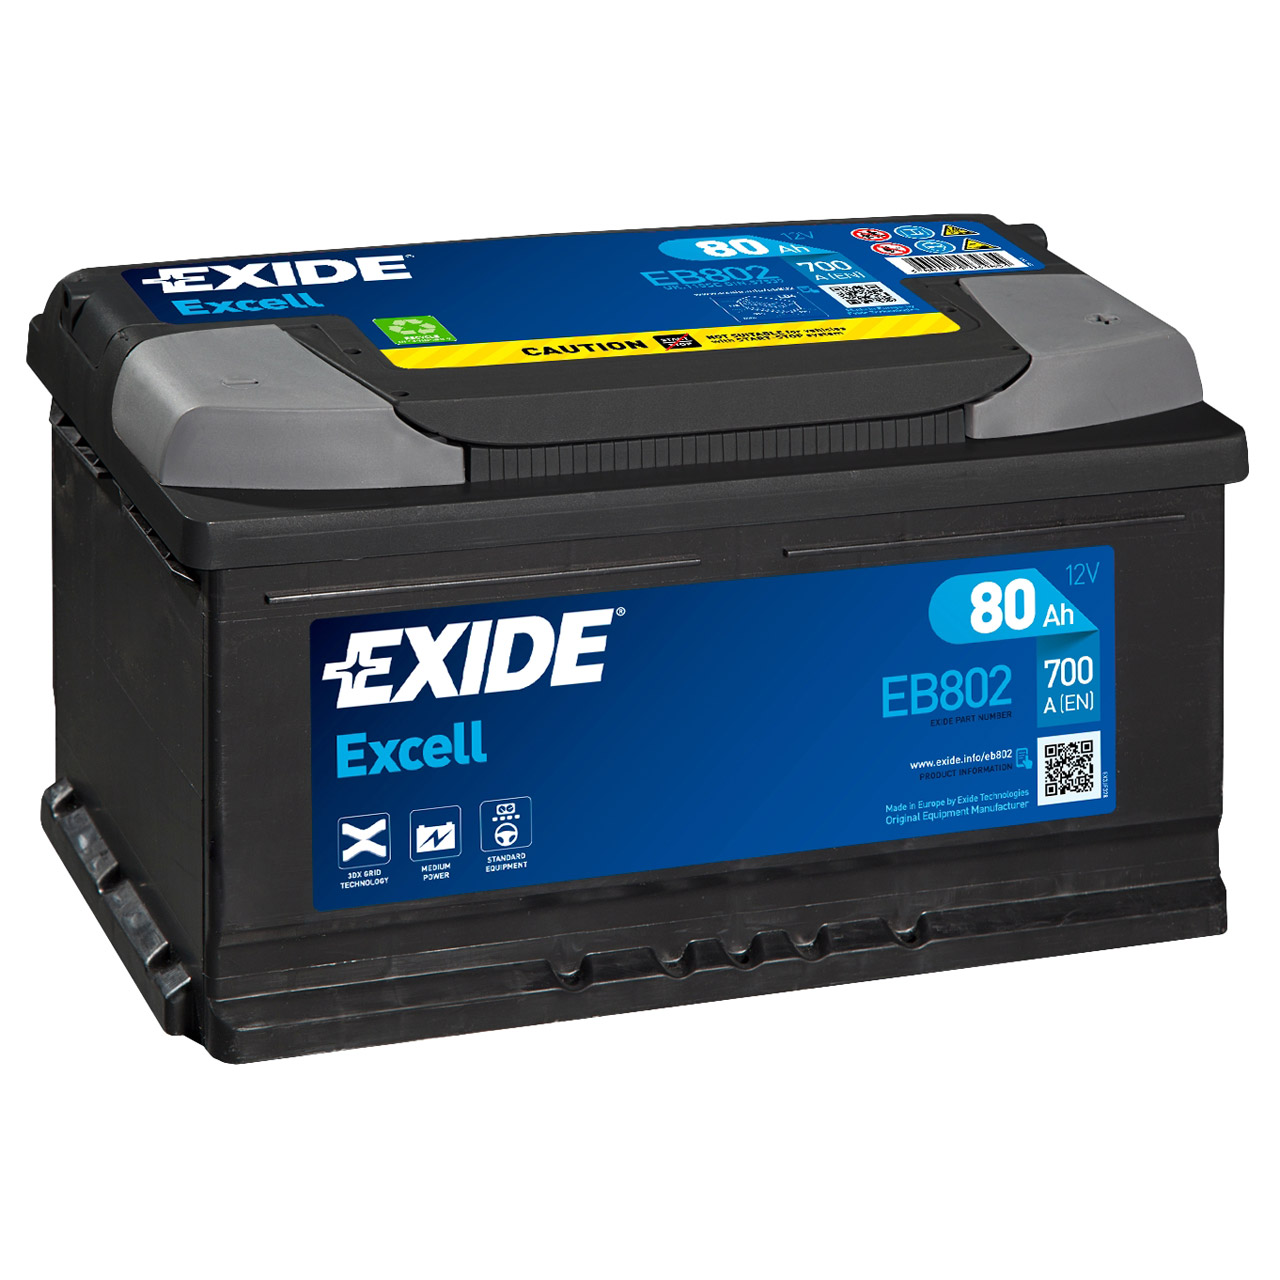 Exide Excell 12V 80Ah 420A/EN EB802 Autobatterie Exide. TecDoc